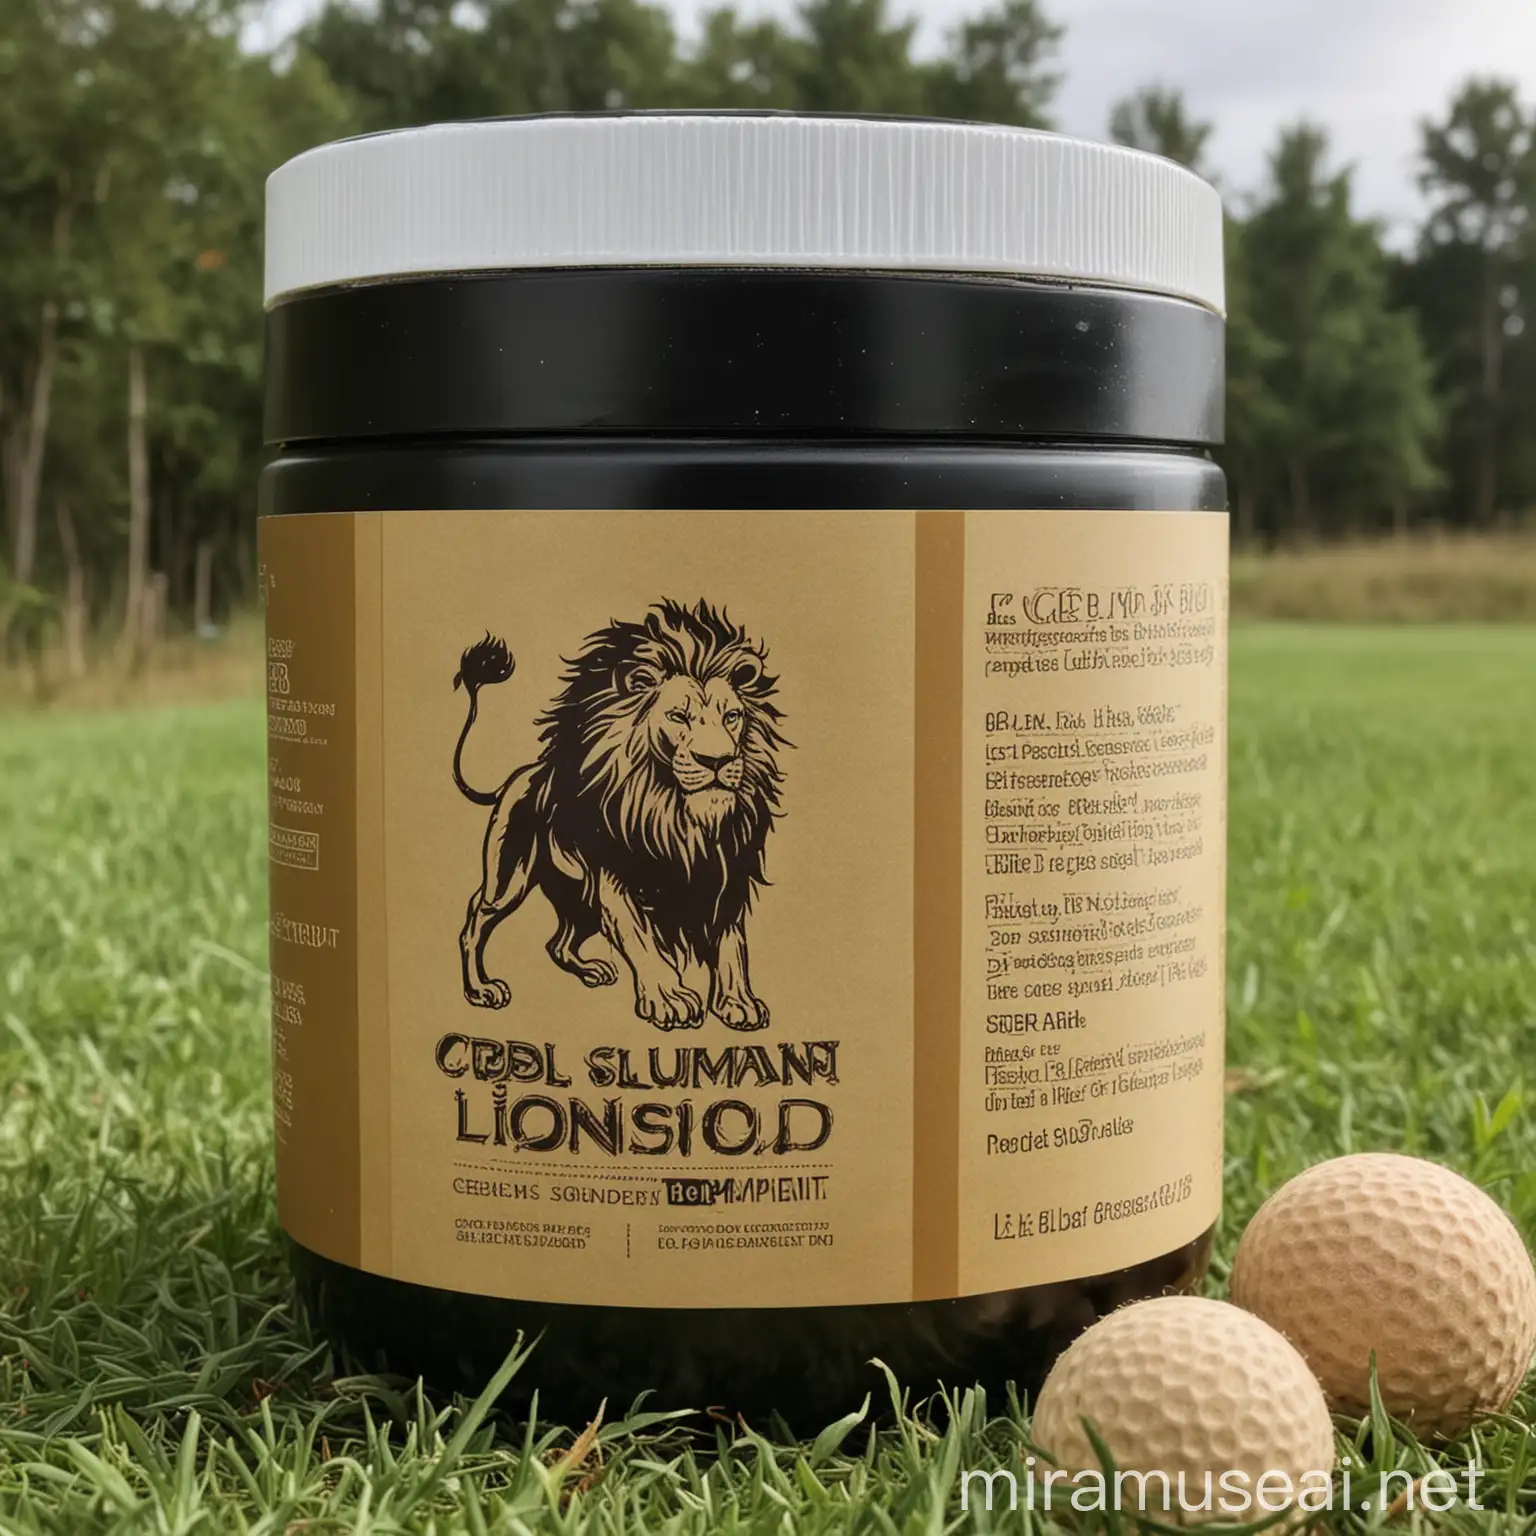 Cbd lionsmane supplement label for golfers